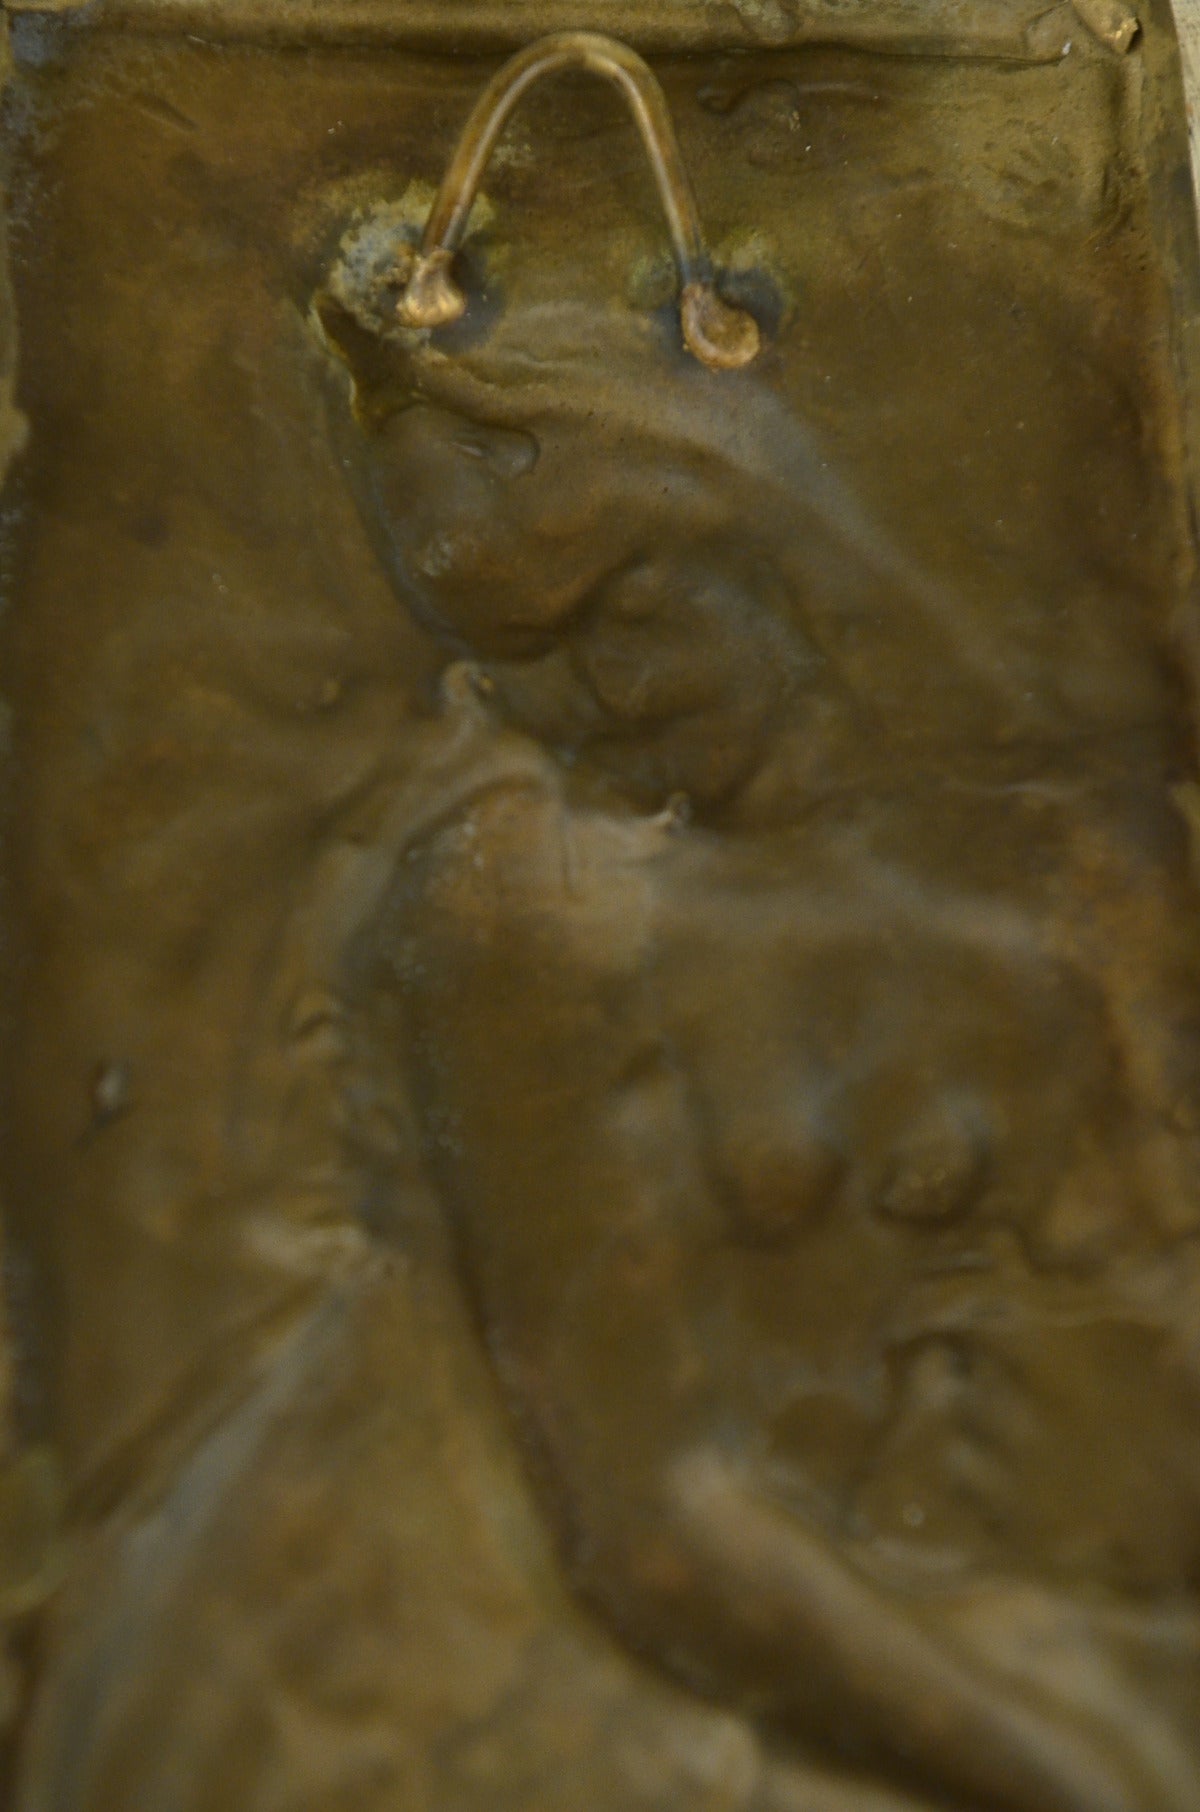 Handcrafted bronze sculpture SALE Wal Lrge Vitaleh Aldo Artist Italian Original